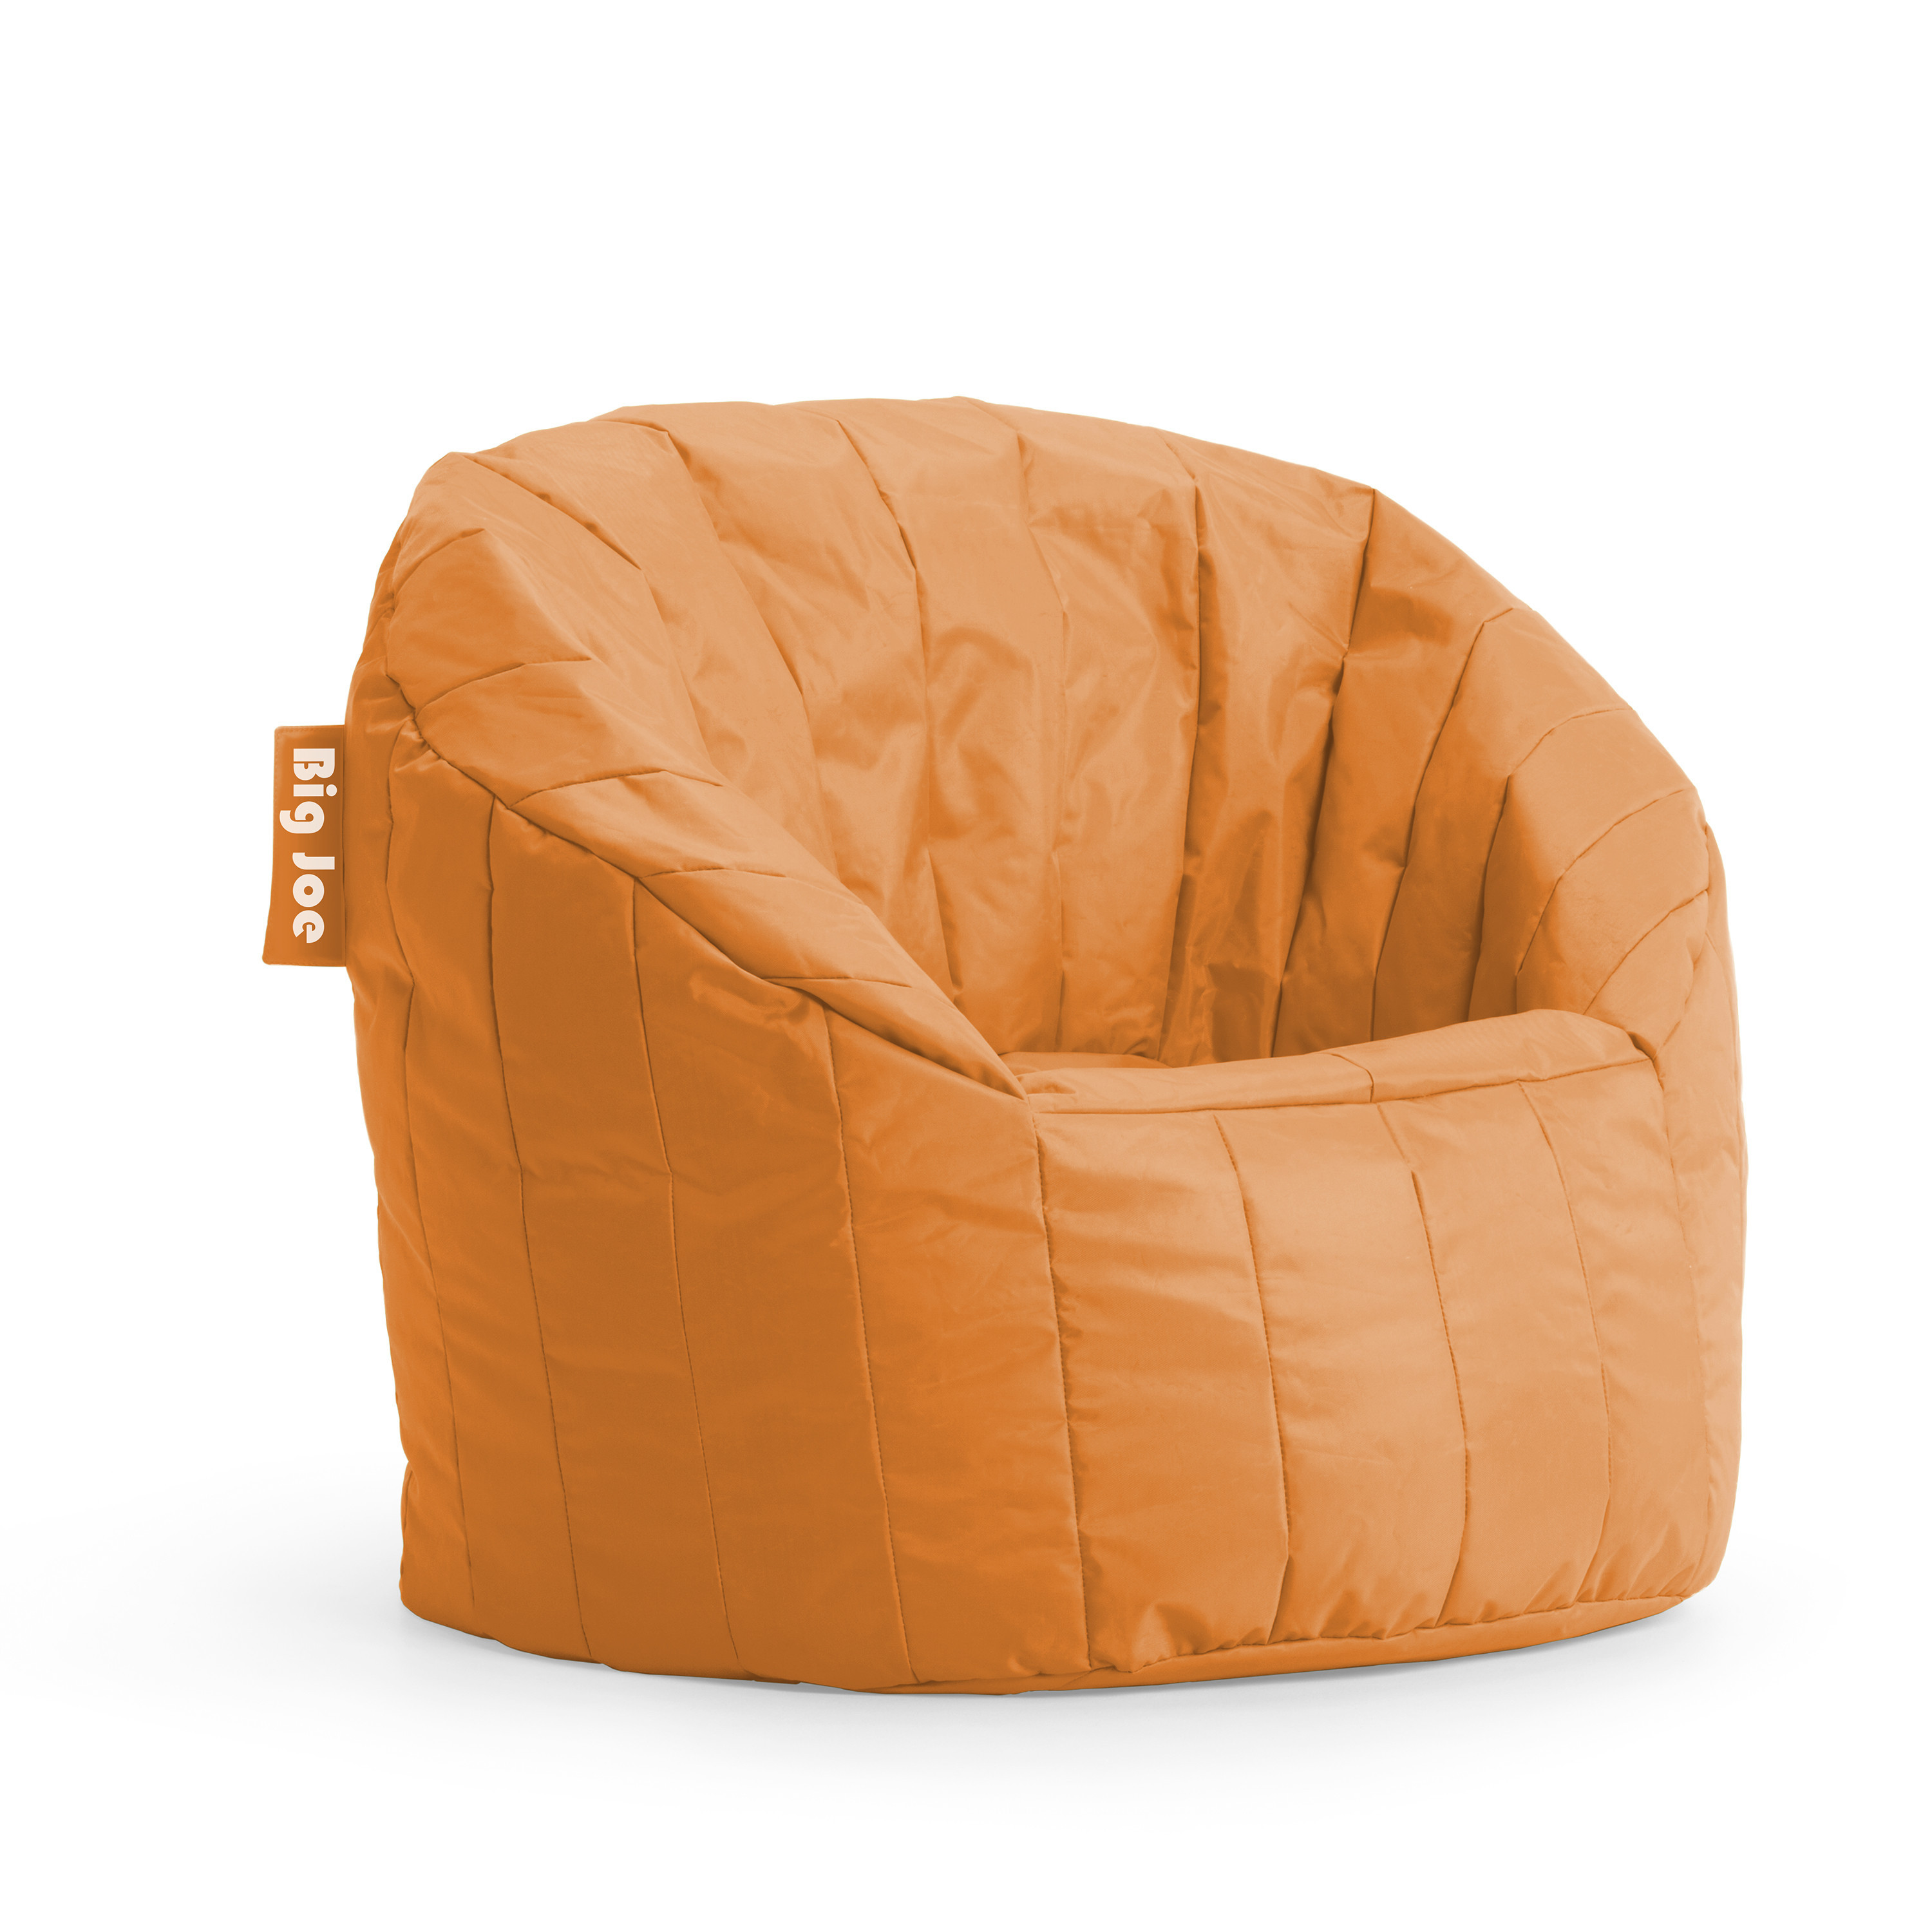 Best ideas about Big Joe Bean Bag Chair
. Save or Pin fort Research Big Joe Bean Bag Chair & Reviews Now.